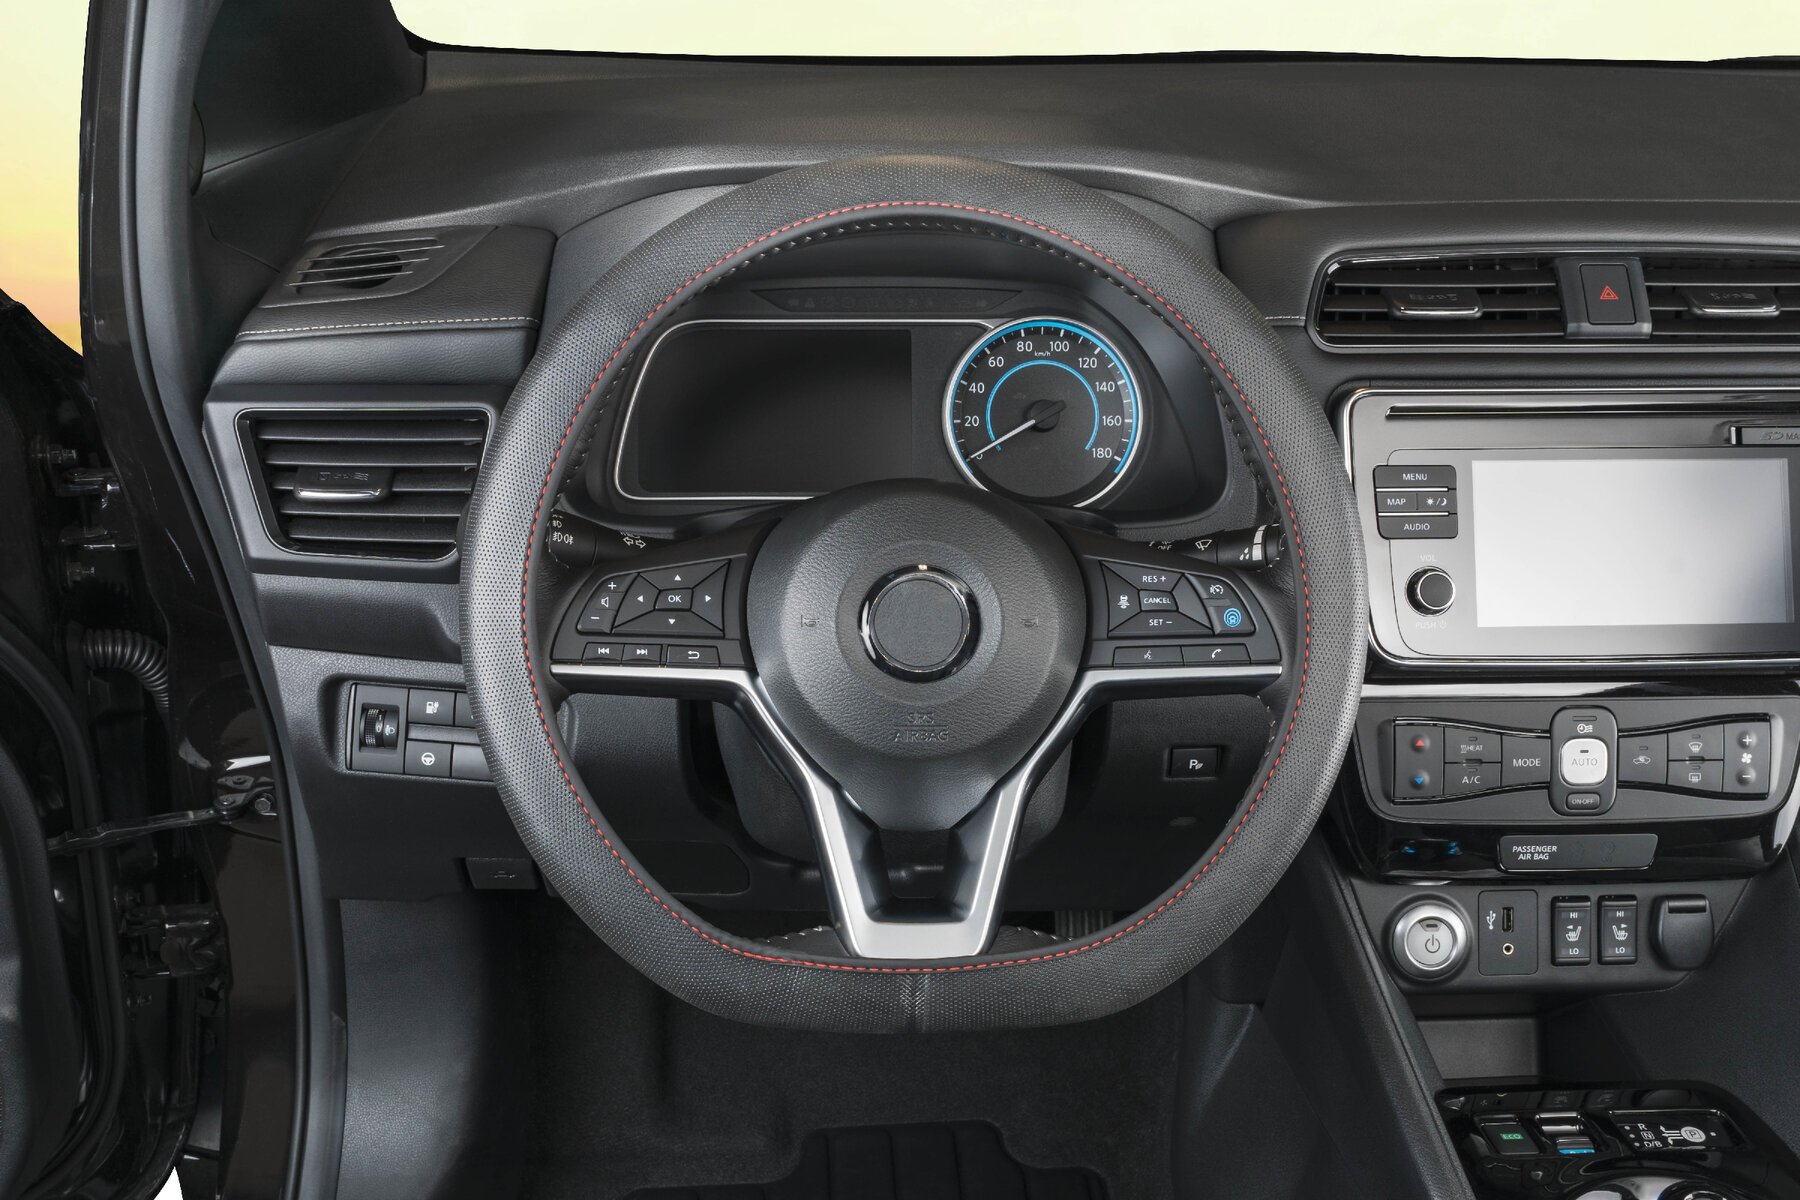 steering wheel cover Soft Grip Classy - 38 cm black-red